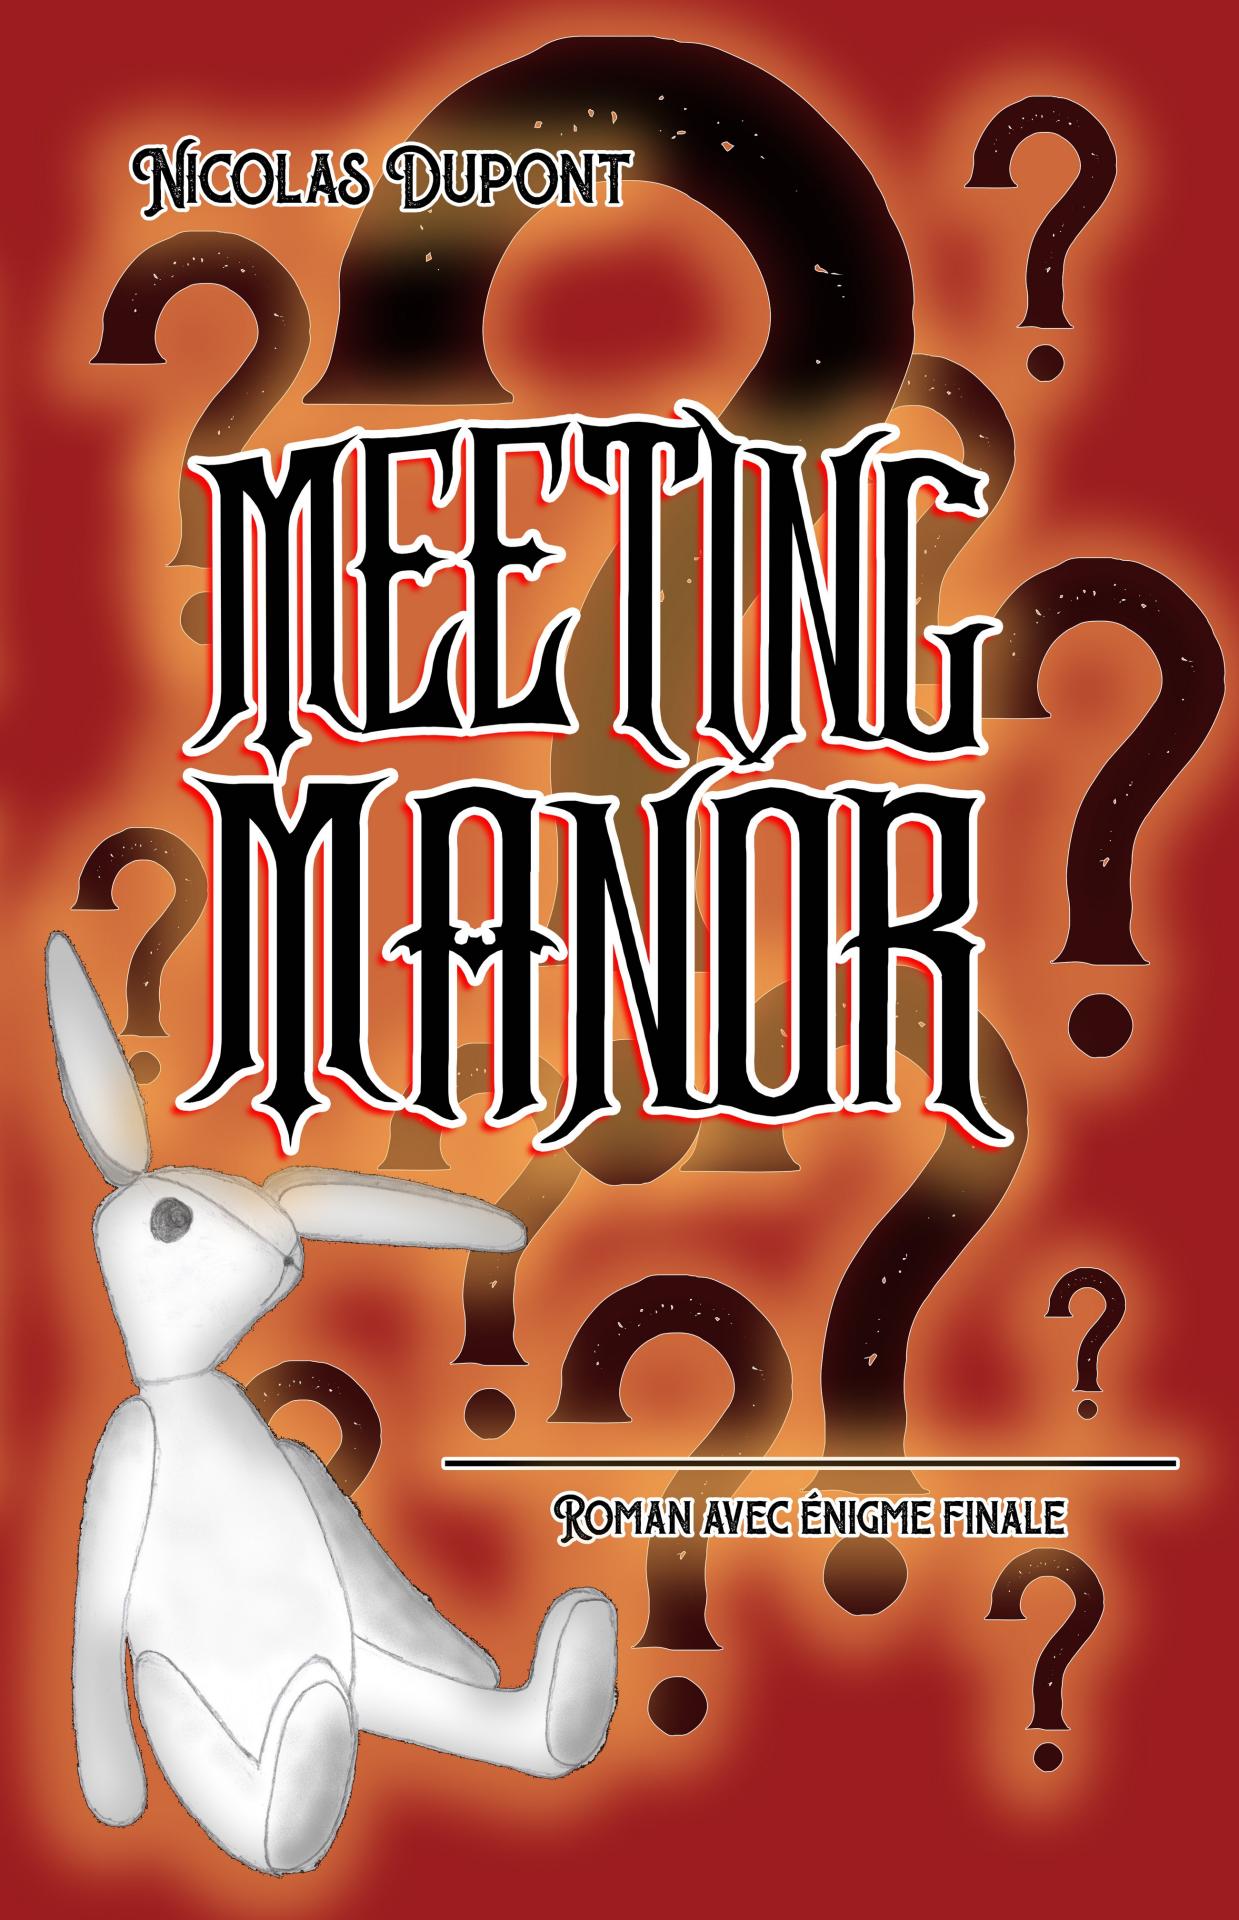 Meeting Manor